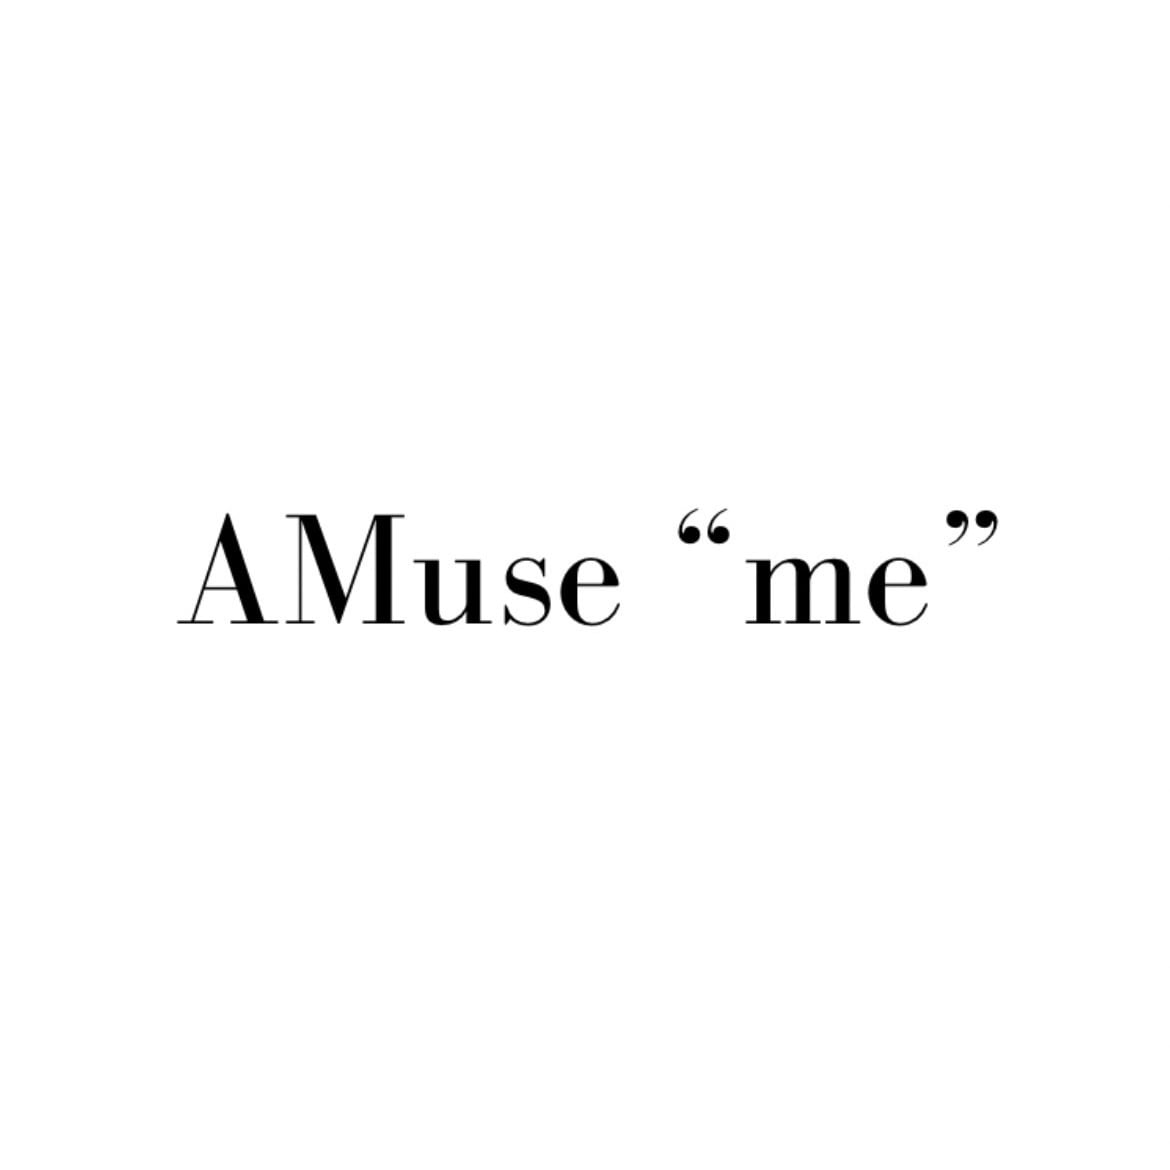 AMuse “me”